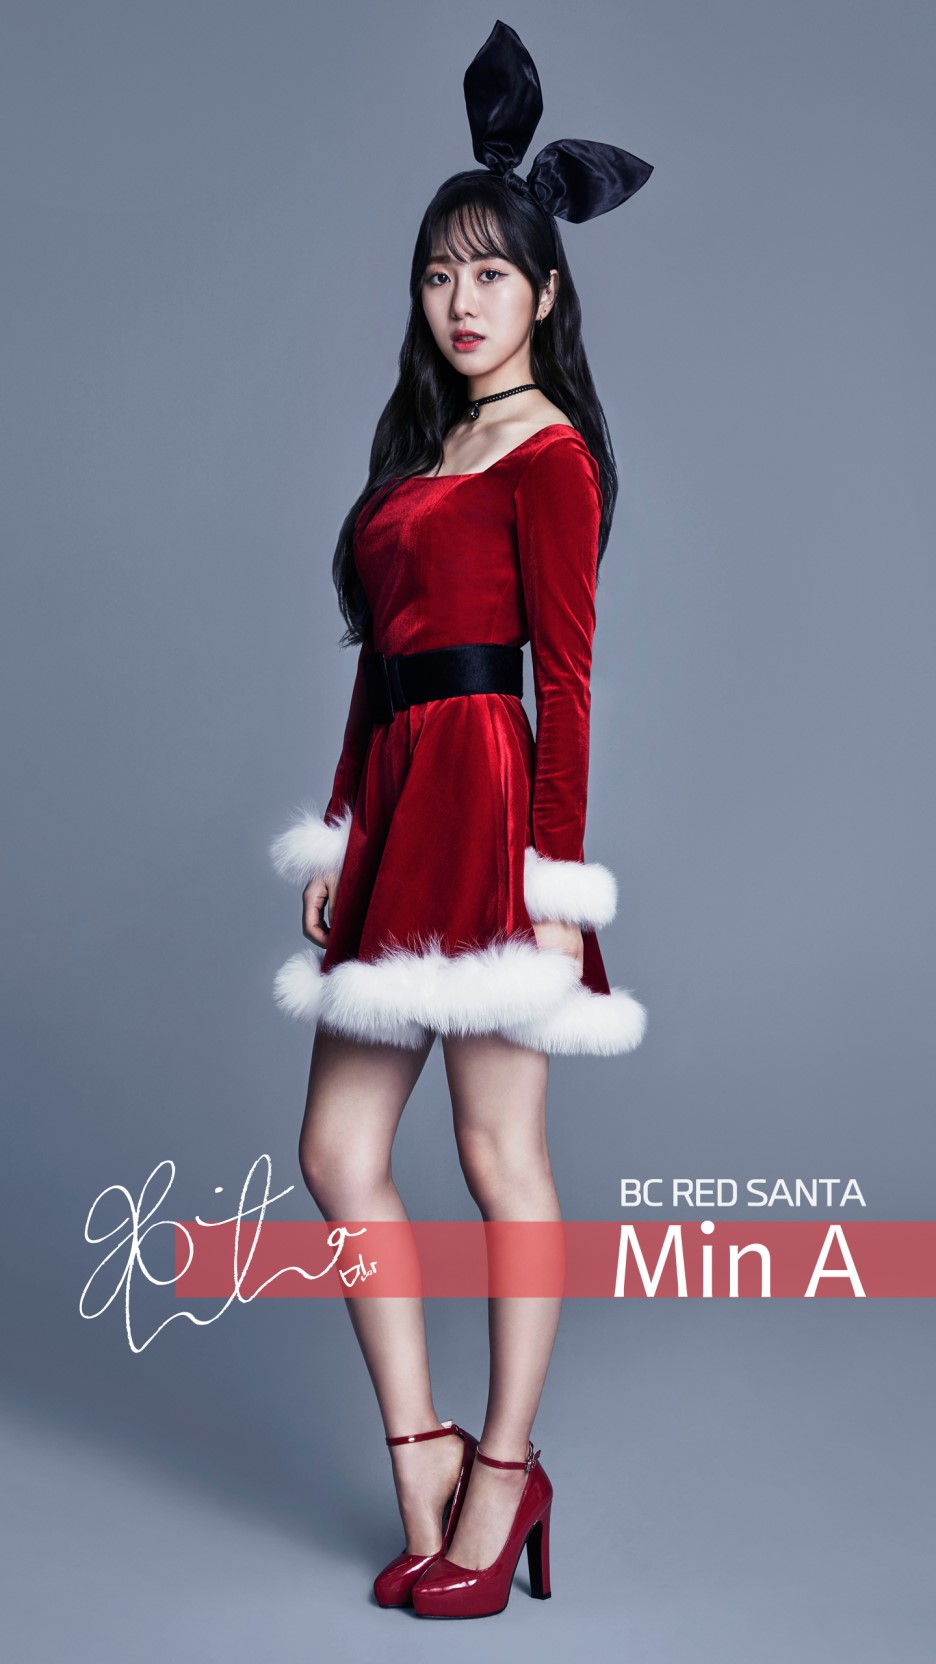 AOA BC카드 RED 산타 페스티벌 홍보이미지